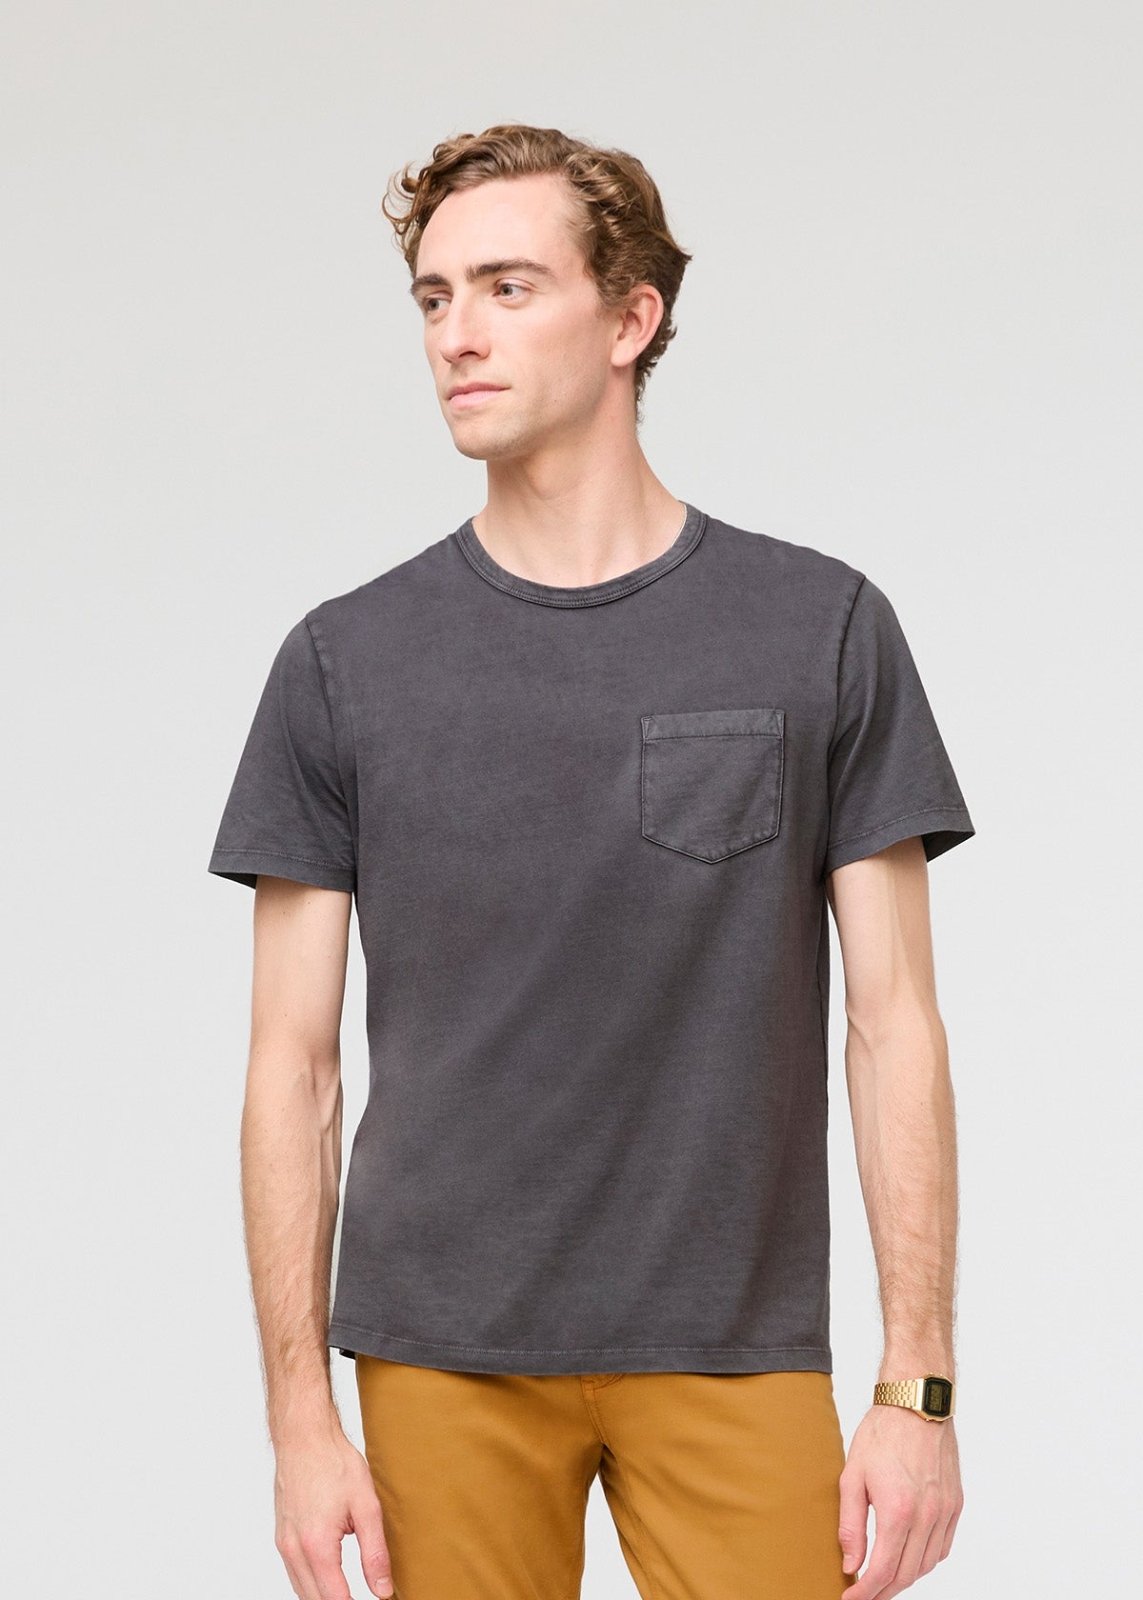 mens pima cotton vintage style grey t-shirt front